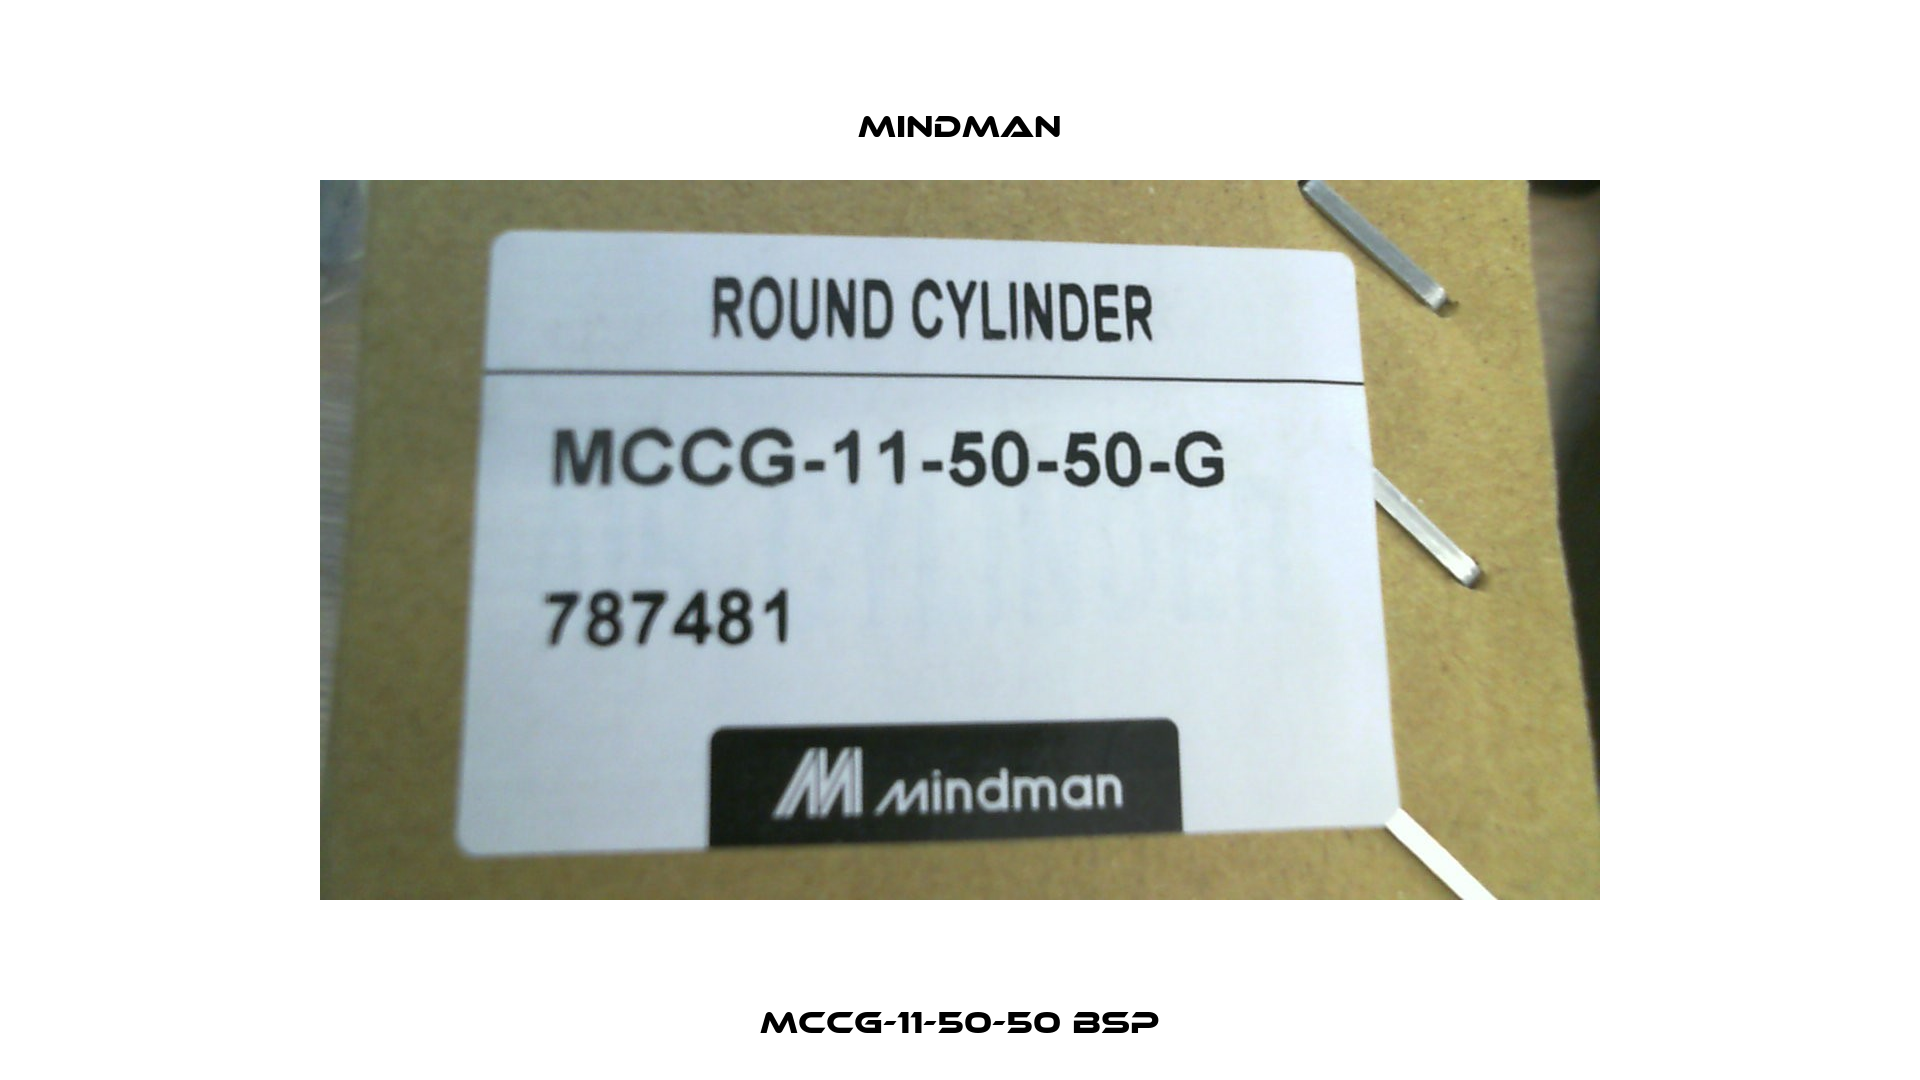 MCCG-11-50-50 BSP Mindman